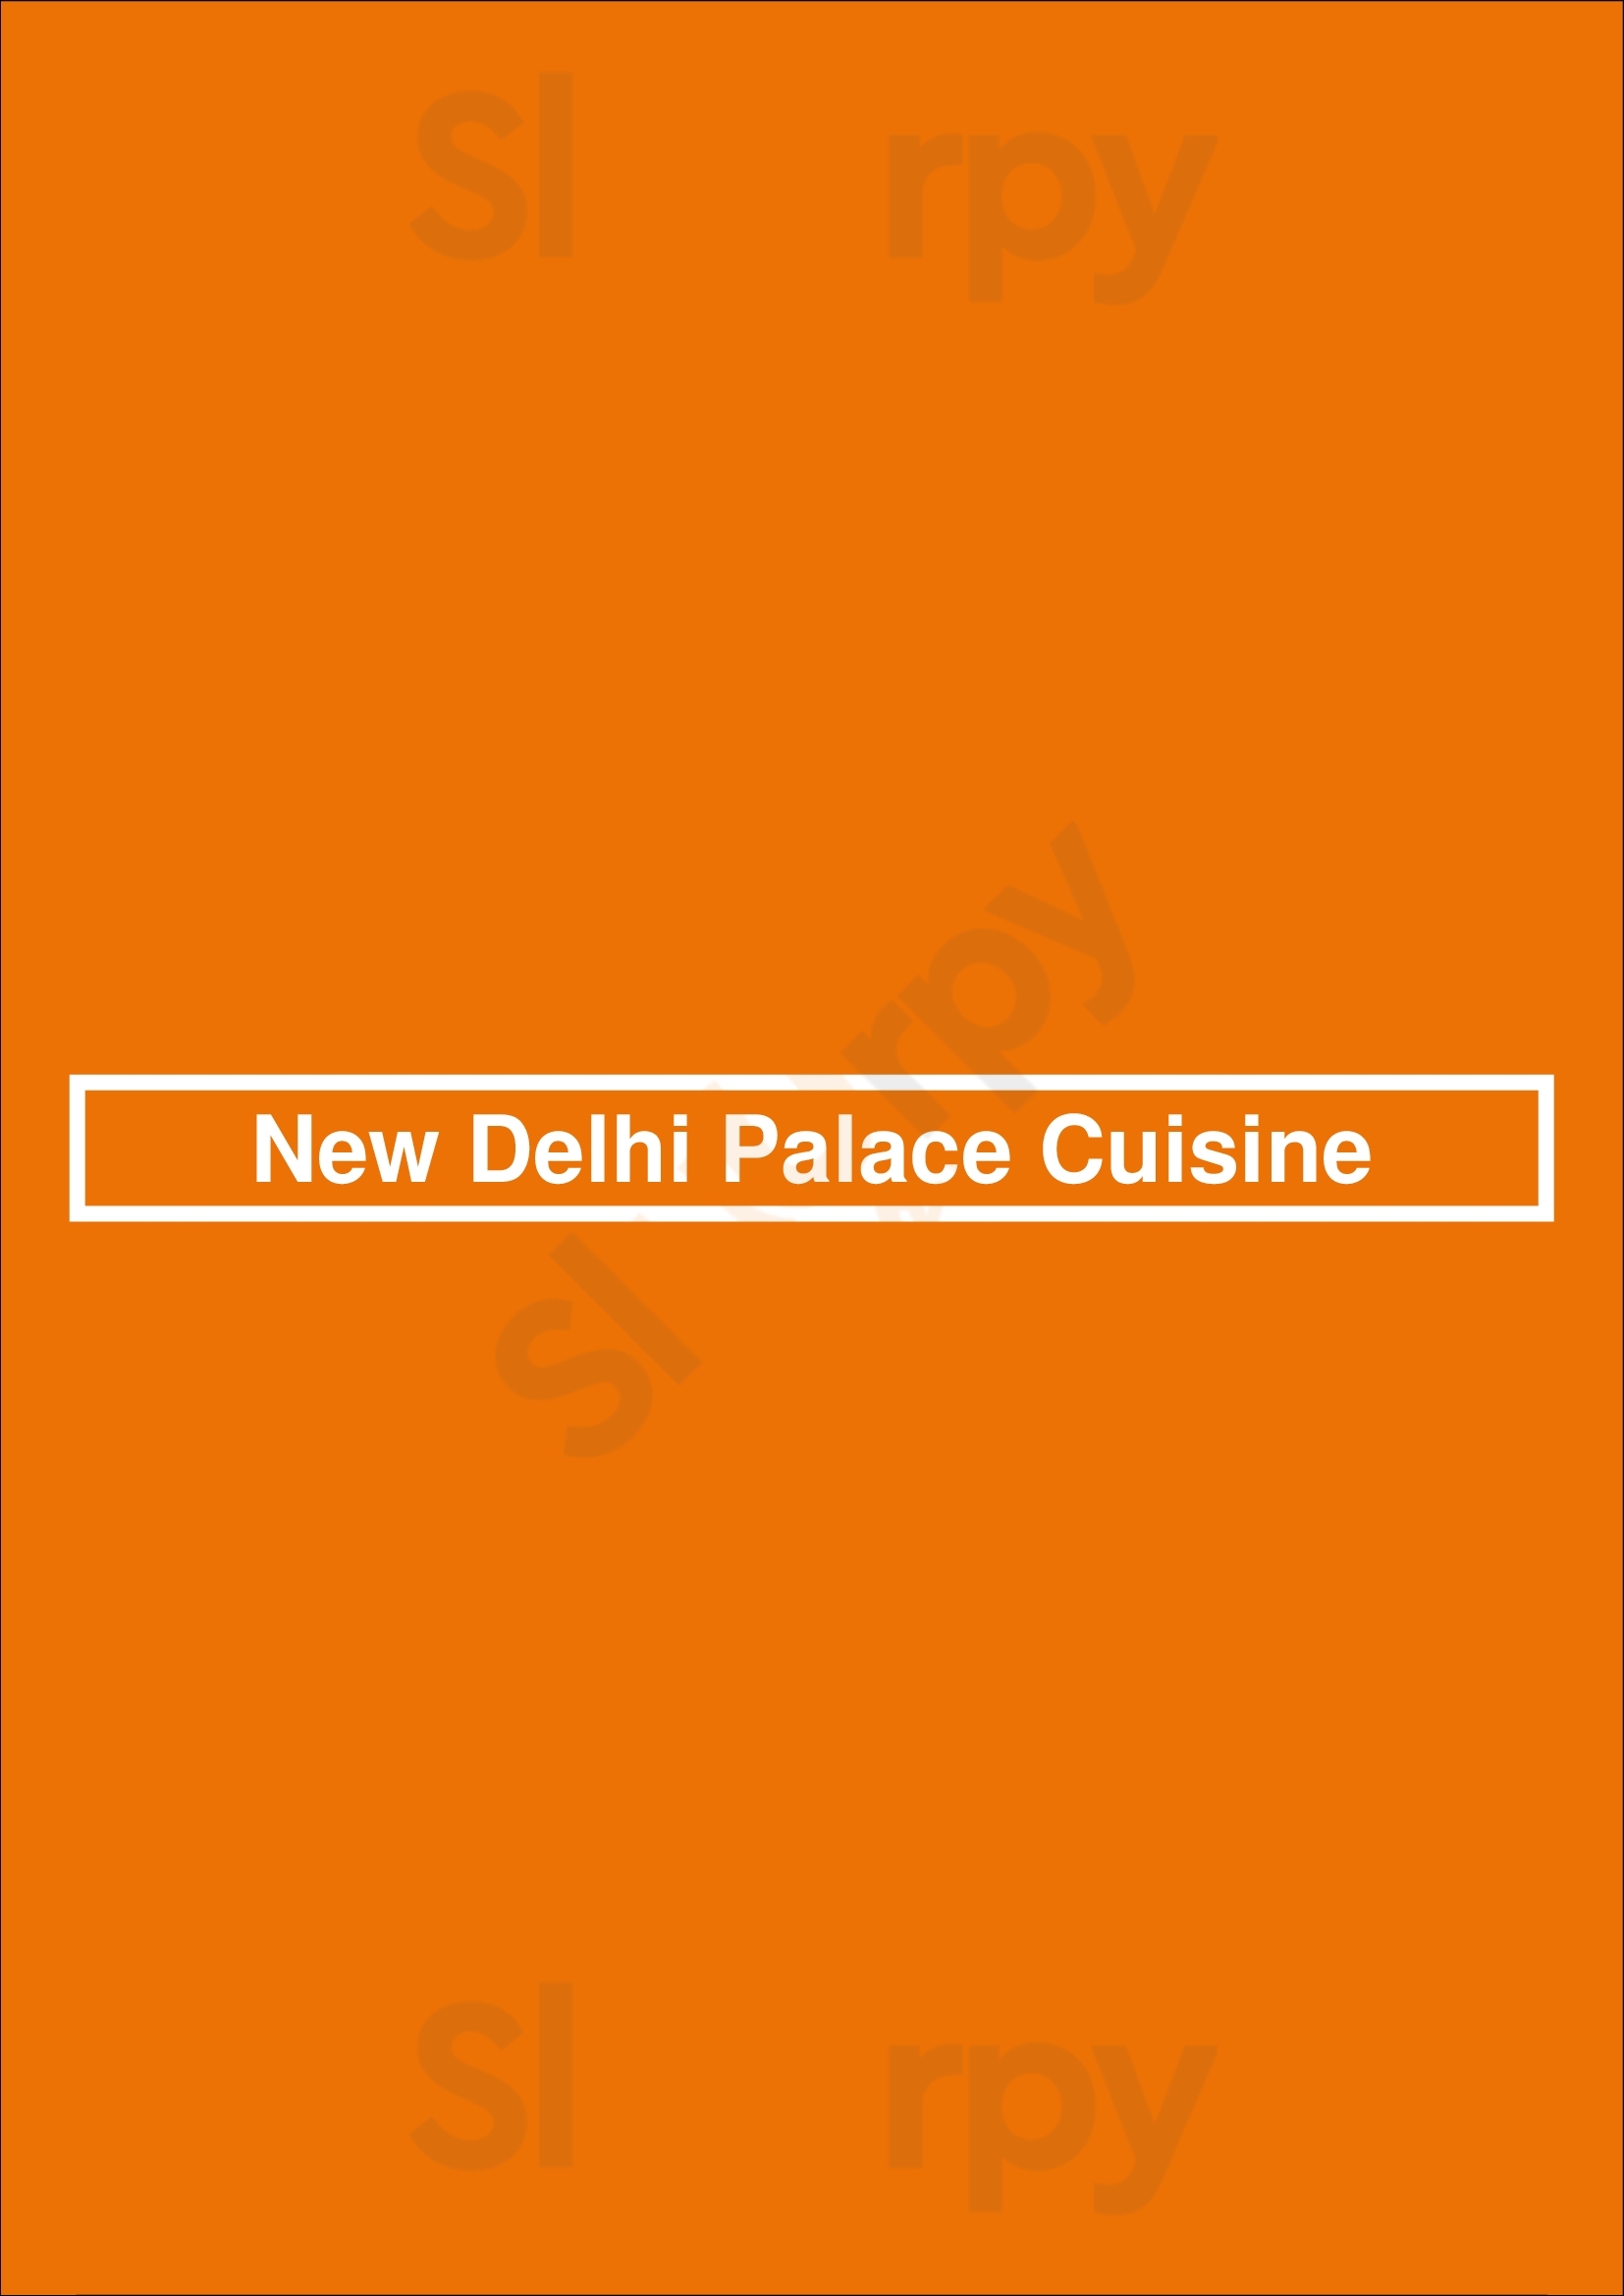 New Delhi Palace Cuisine Pasadena Menu - 1